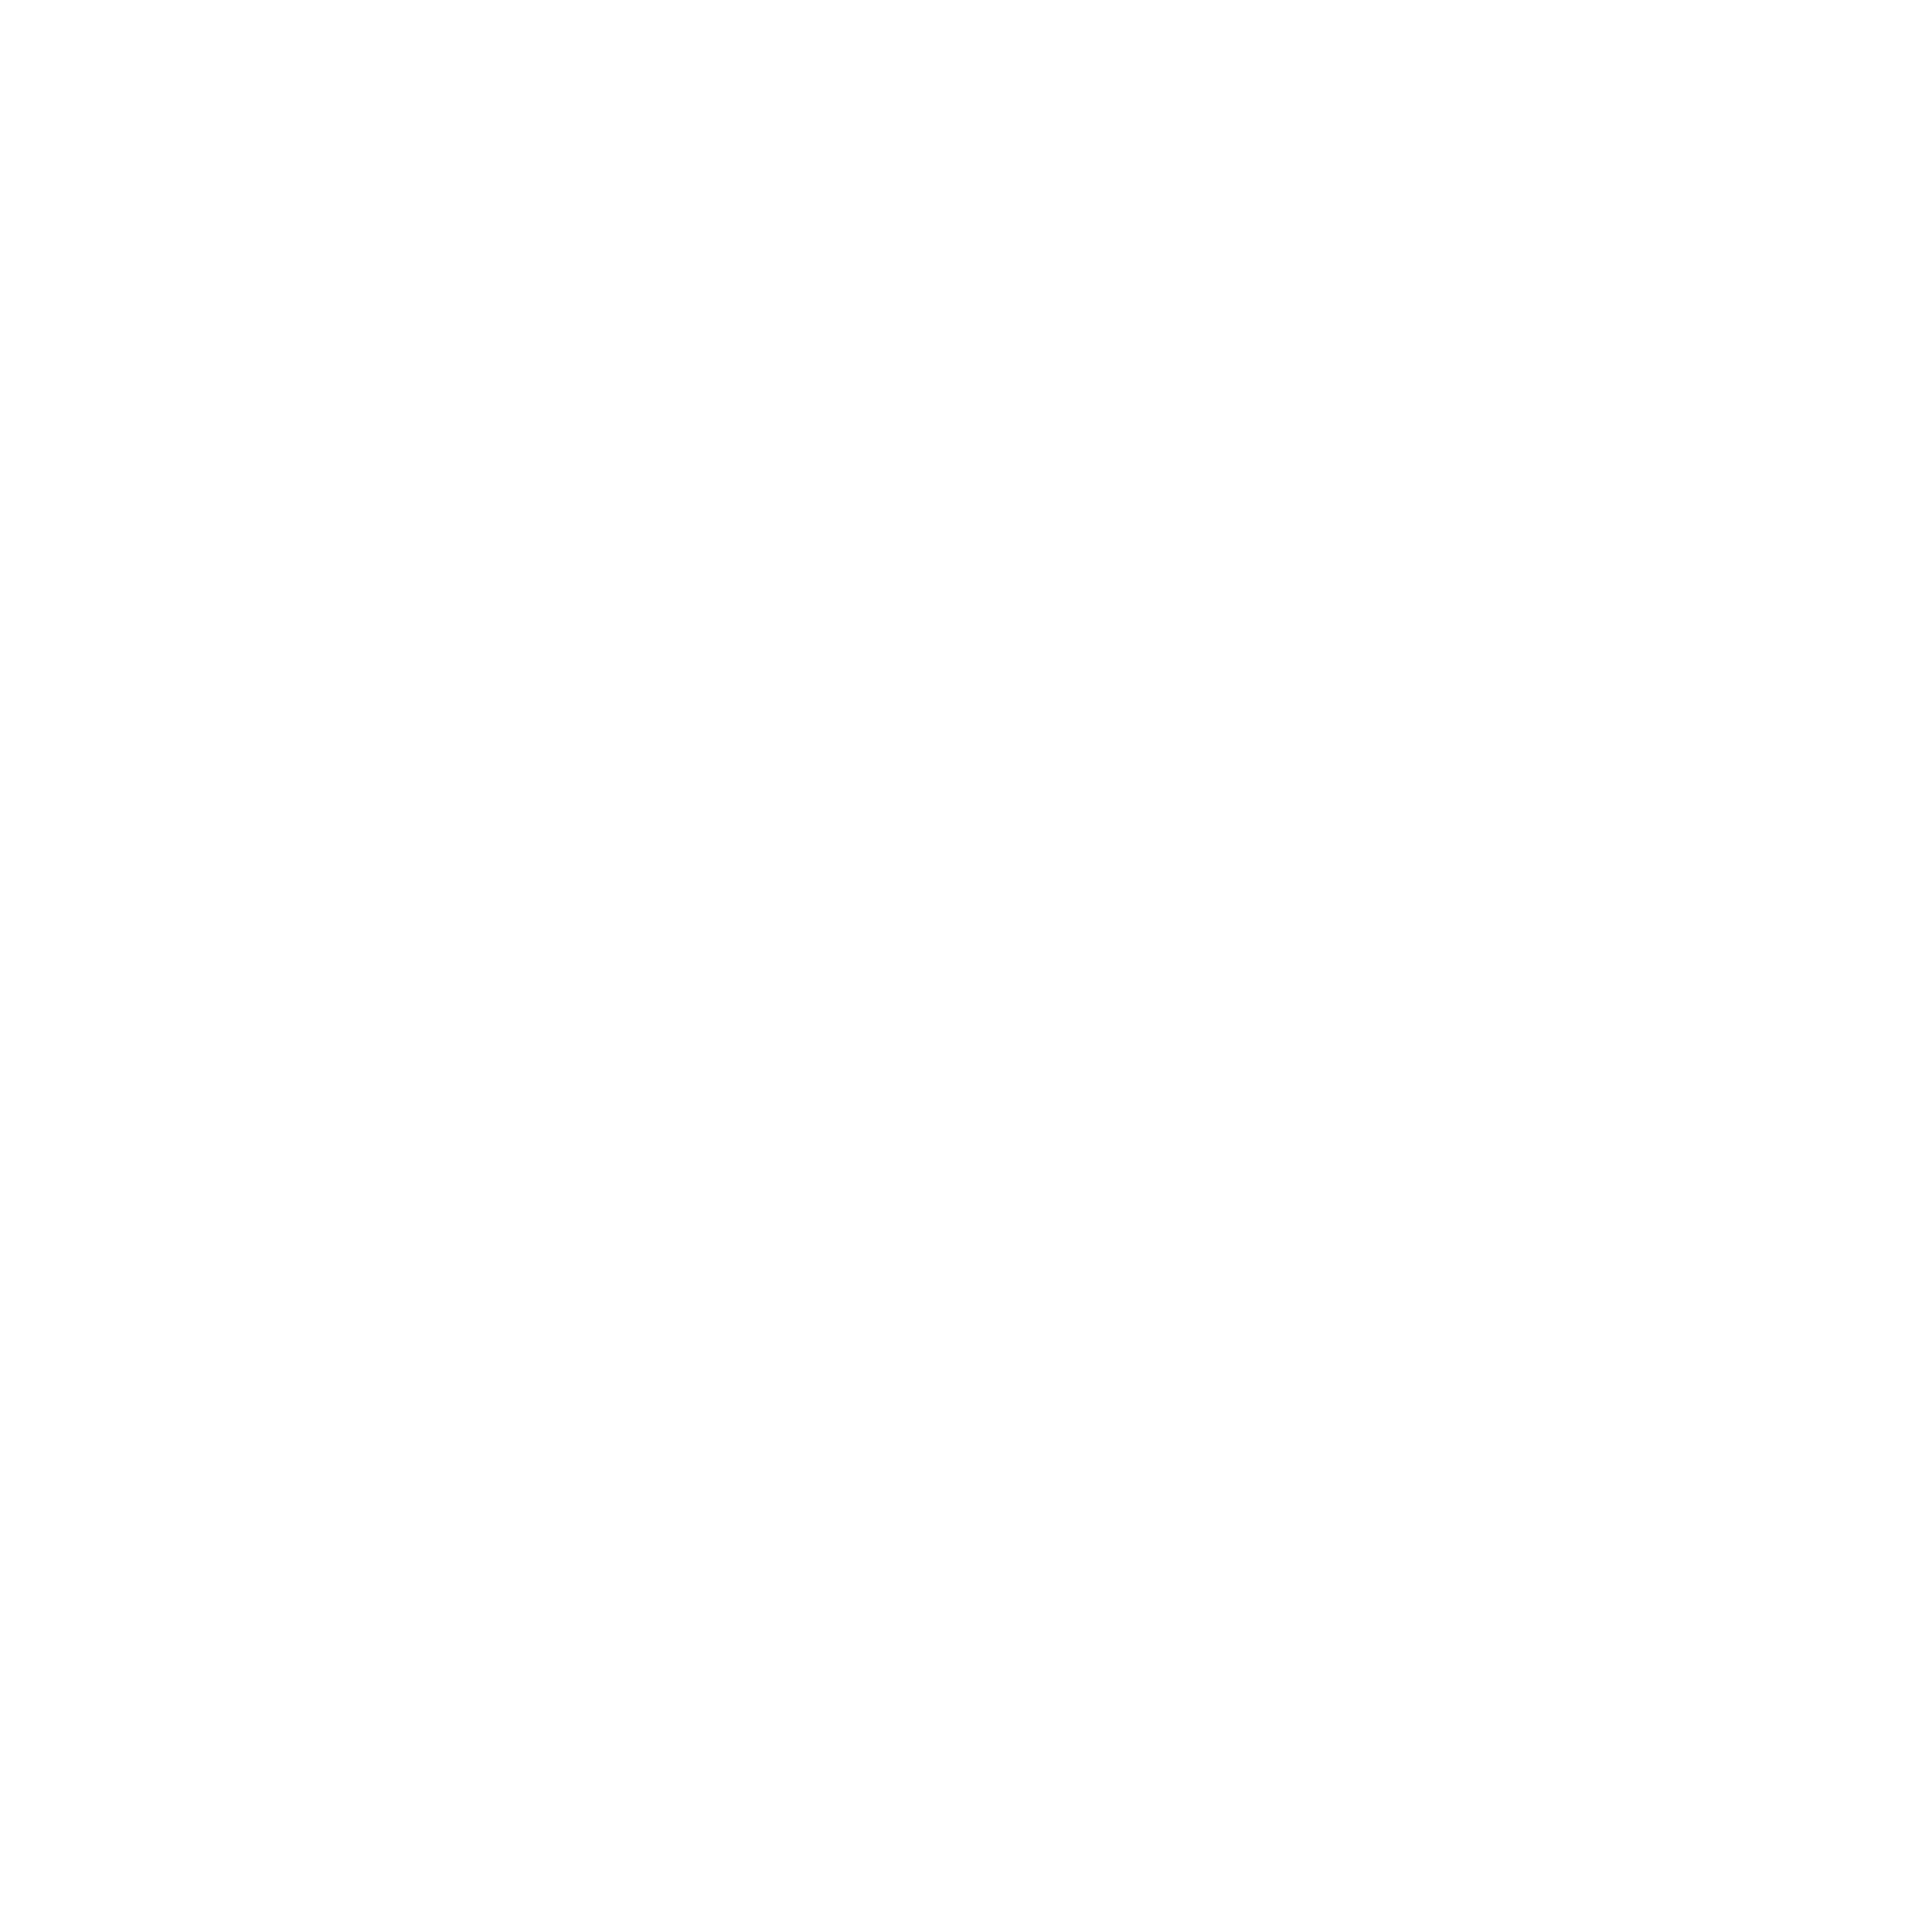 Rox Linz – Burger, Grill, Music-Bar